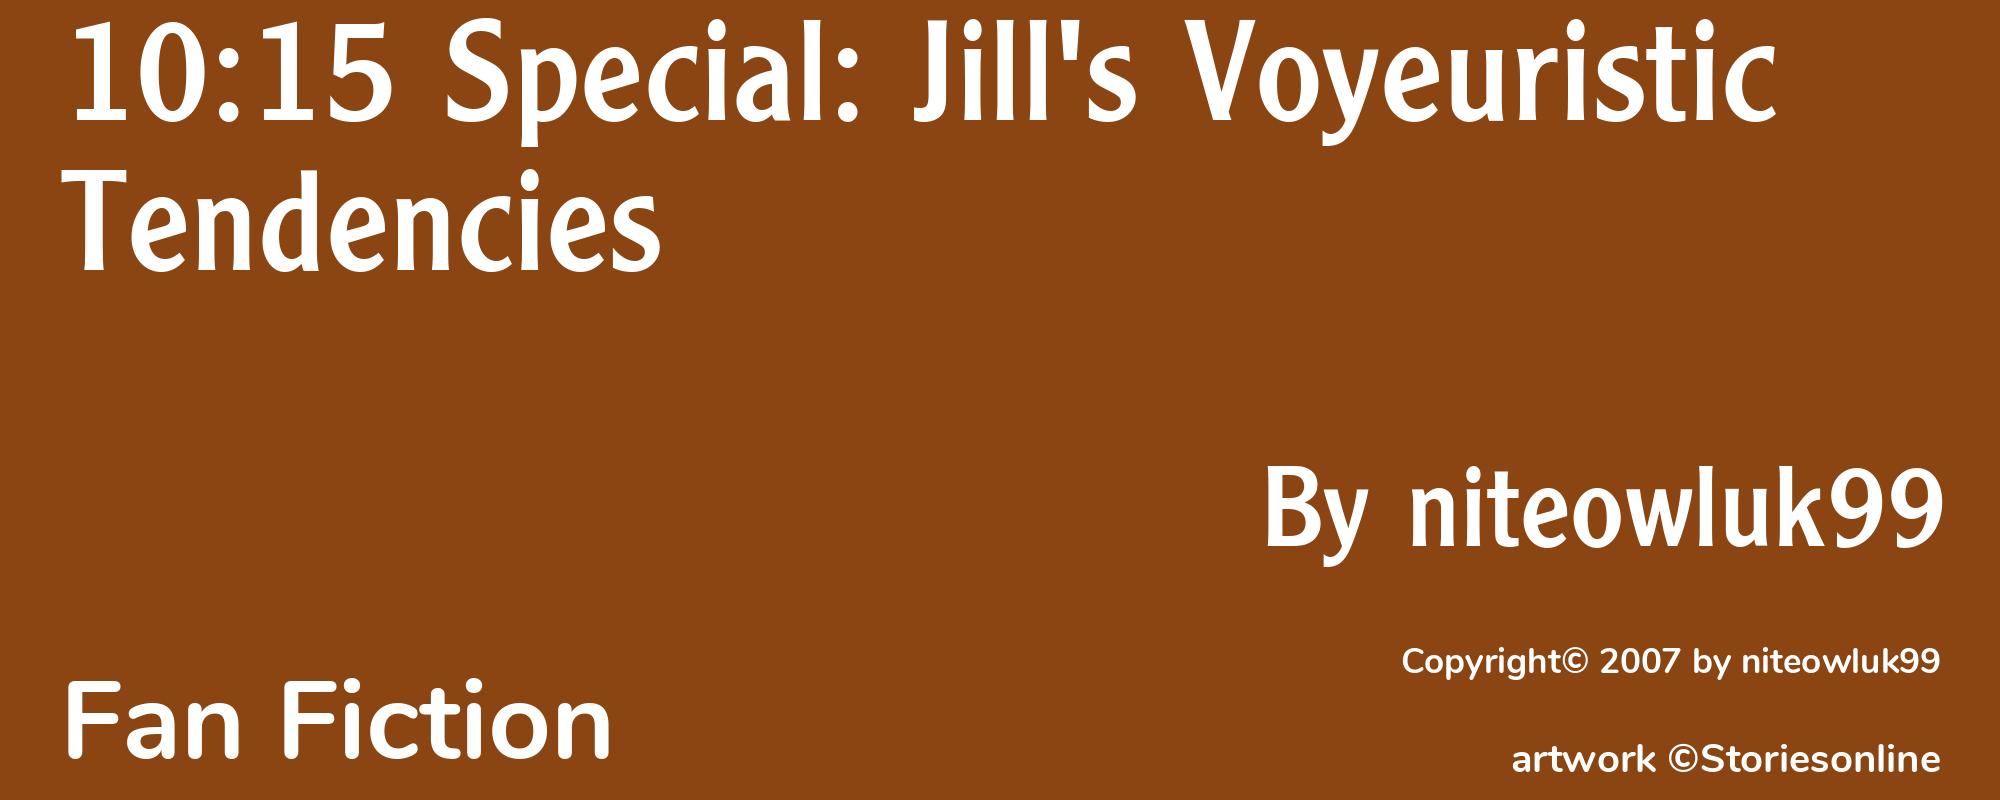 10:15 Special: Jill's Voyeuristic Tendencies - Cover